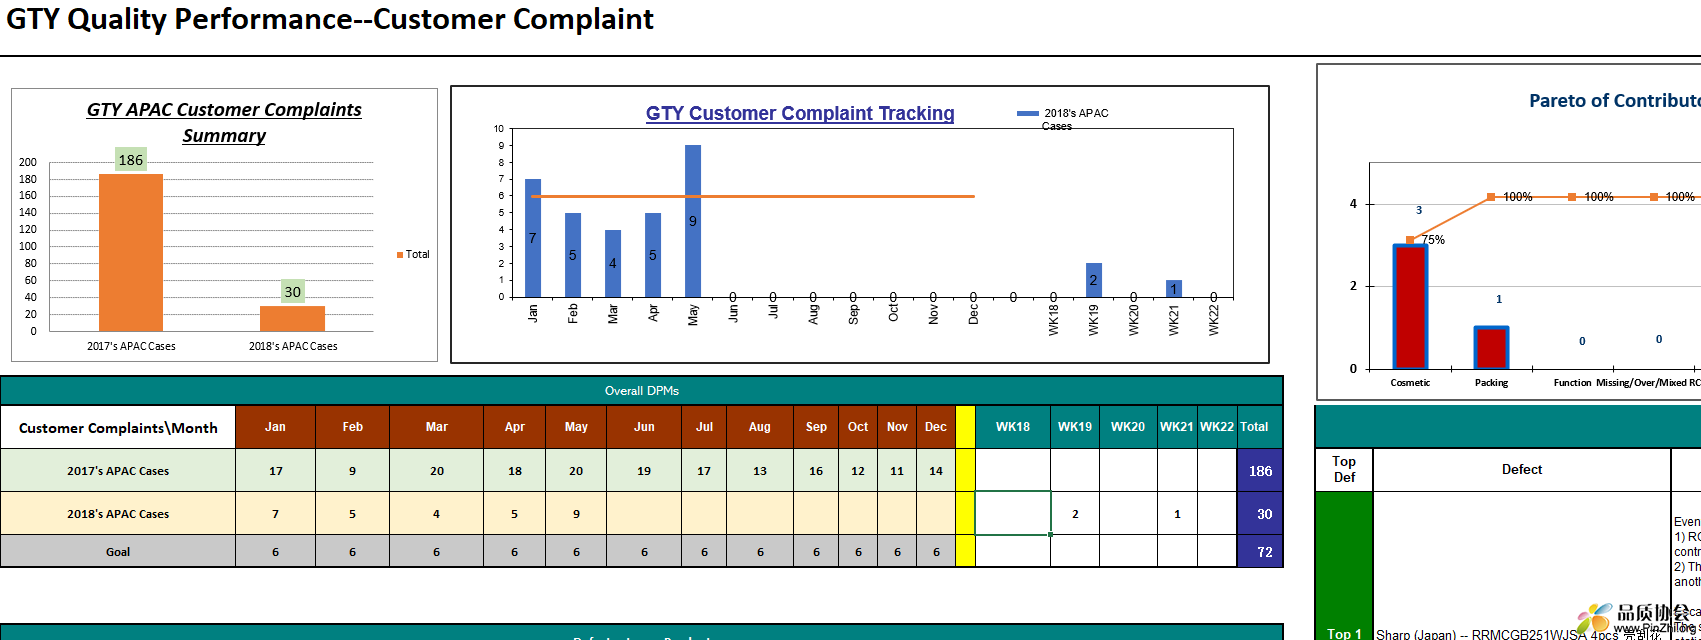 GTY Quality Performance - Customer Complaint